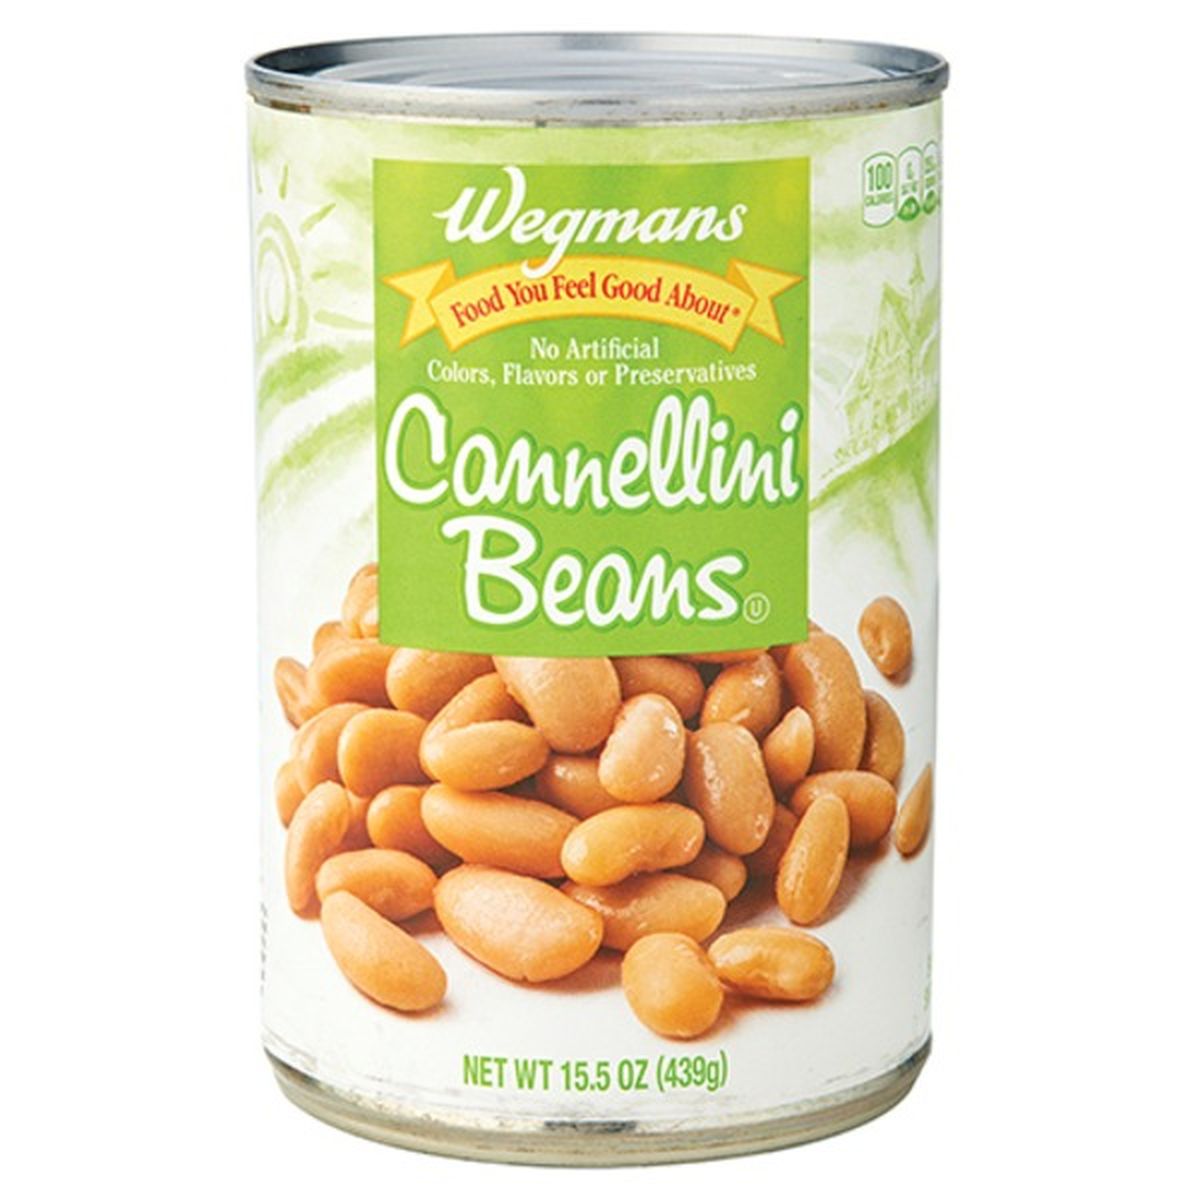 Calories in Wegmans Cannellini Beans